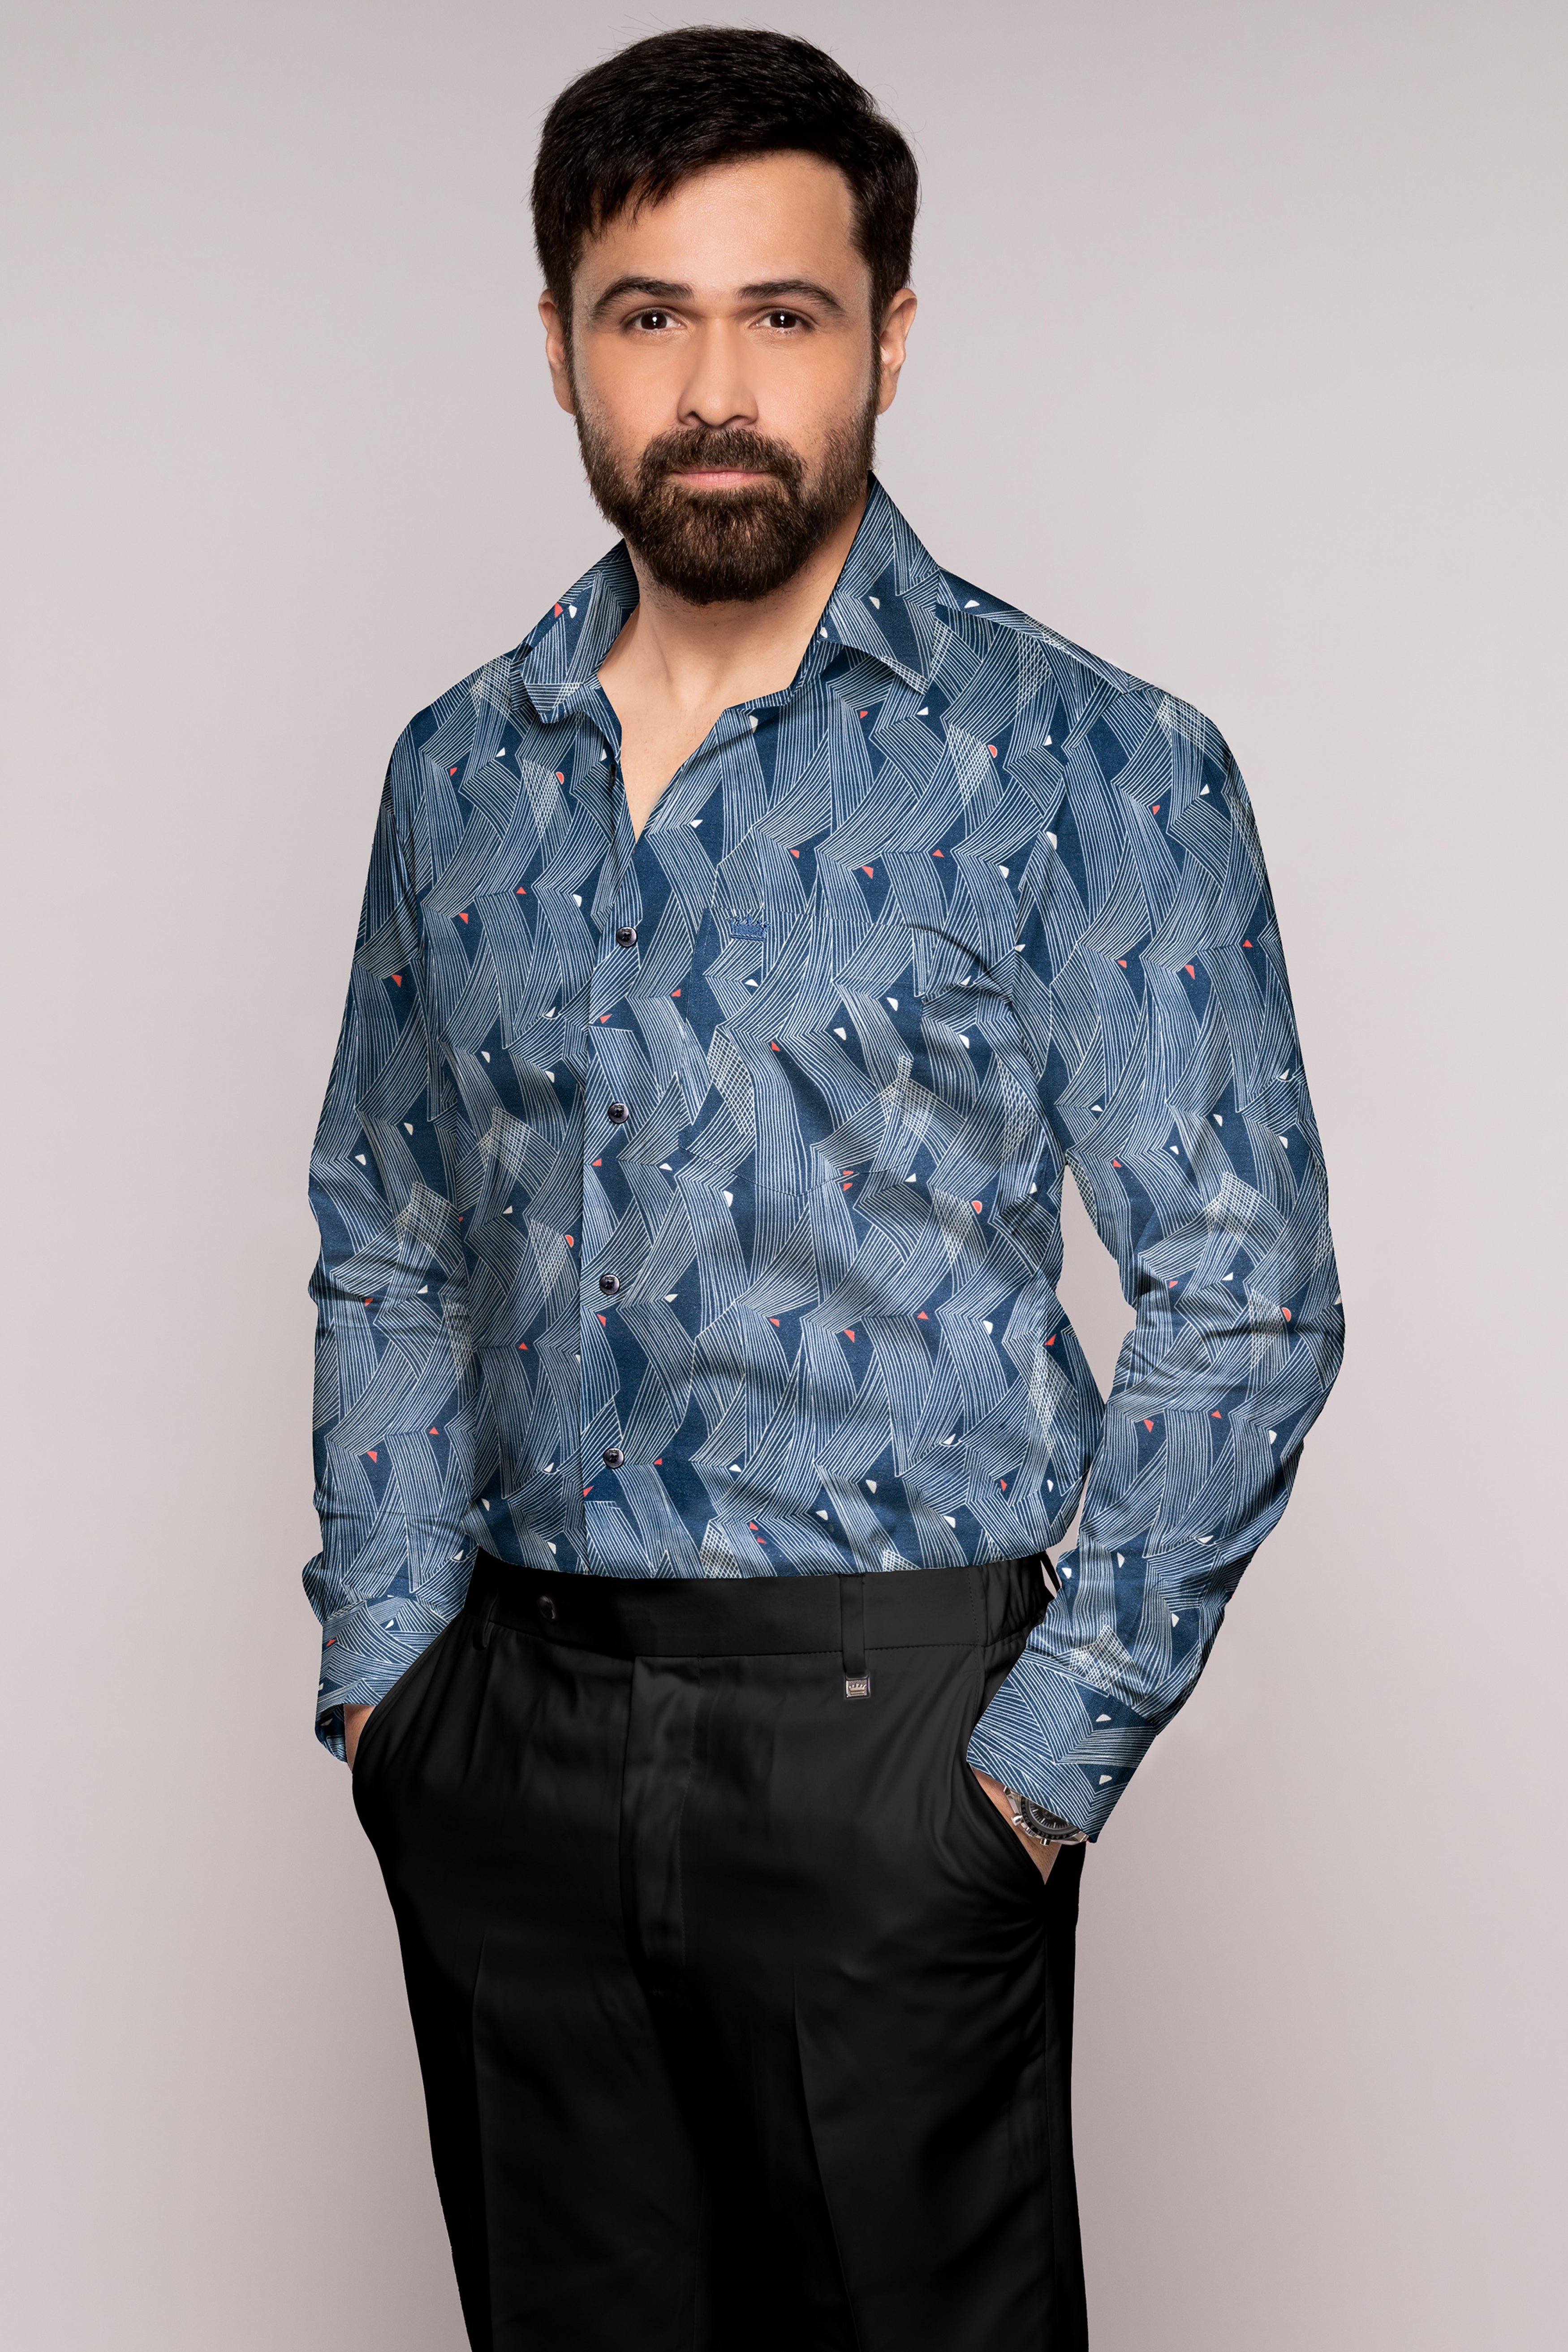 Timber Blue and White Line Waves Printed Subtle Sheen Super Soft Premium Cotton Designer Shirt